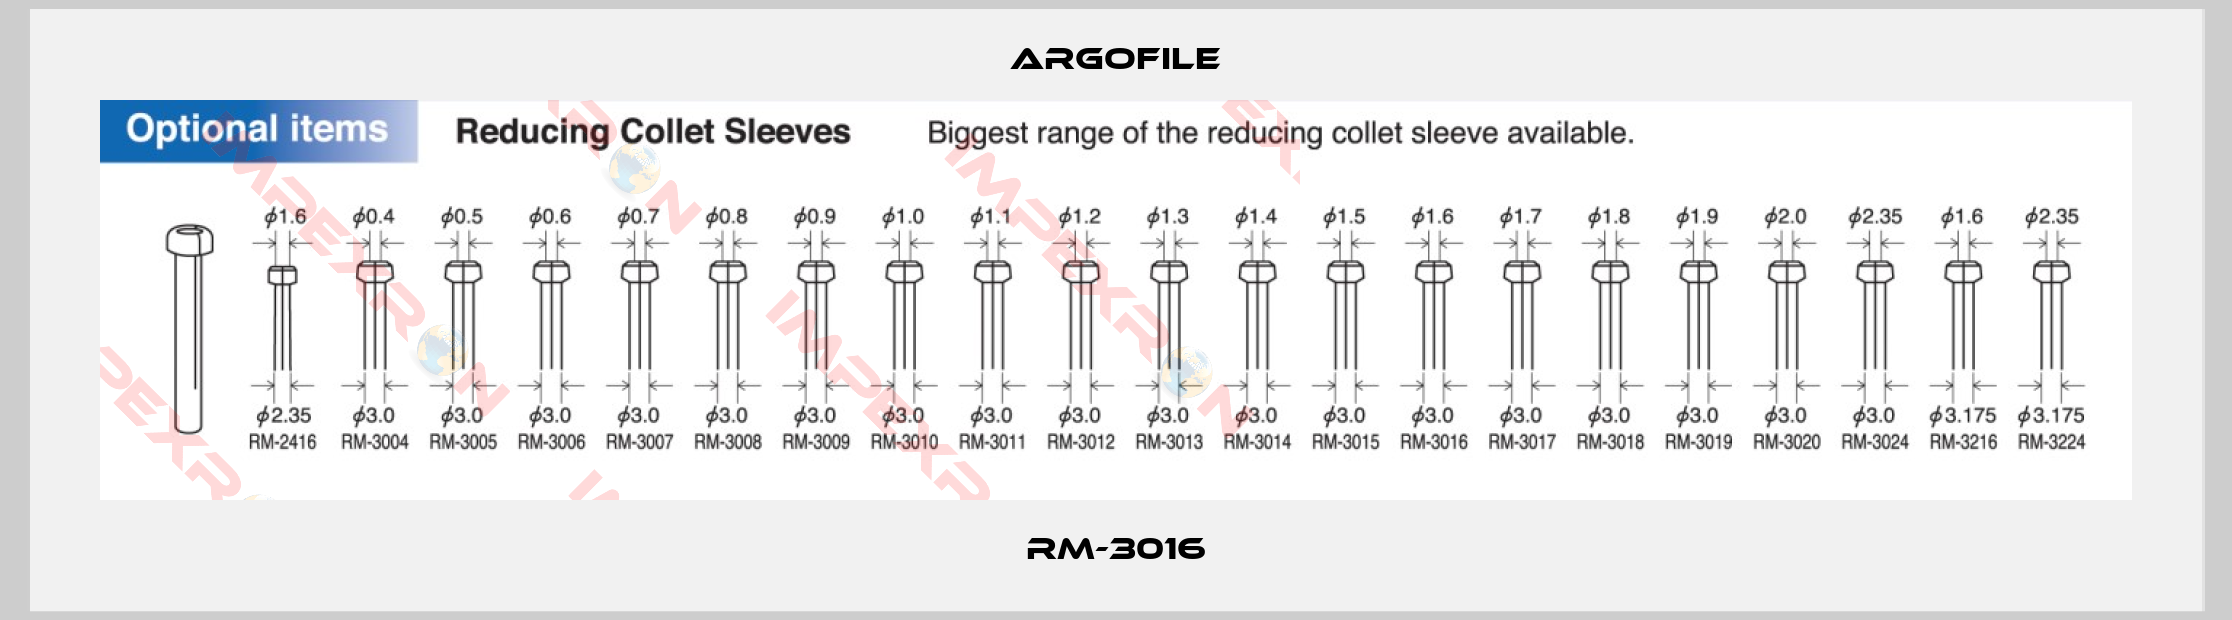 Argofile-RM-3016